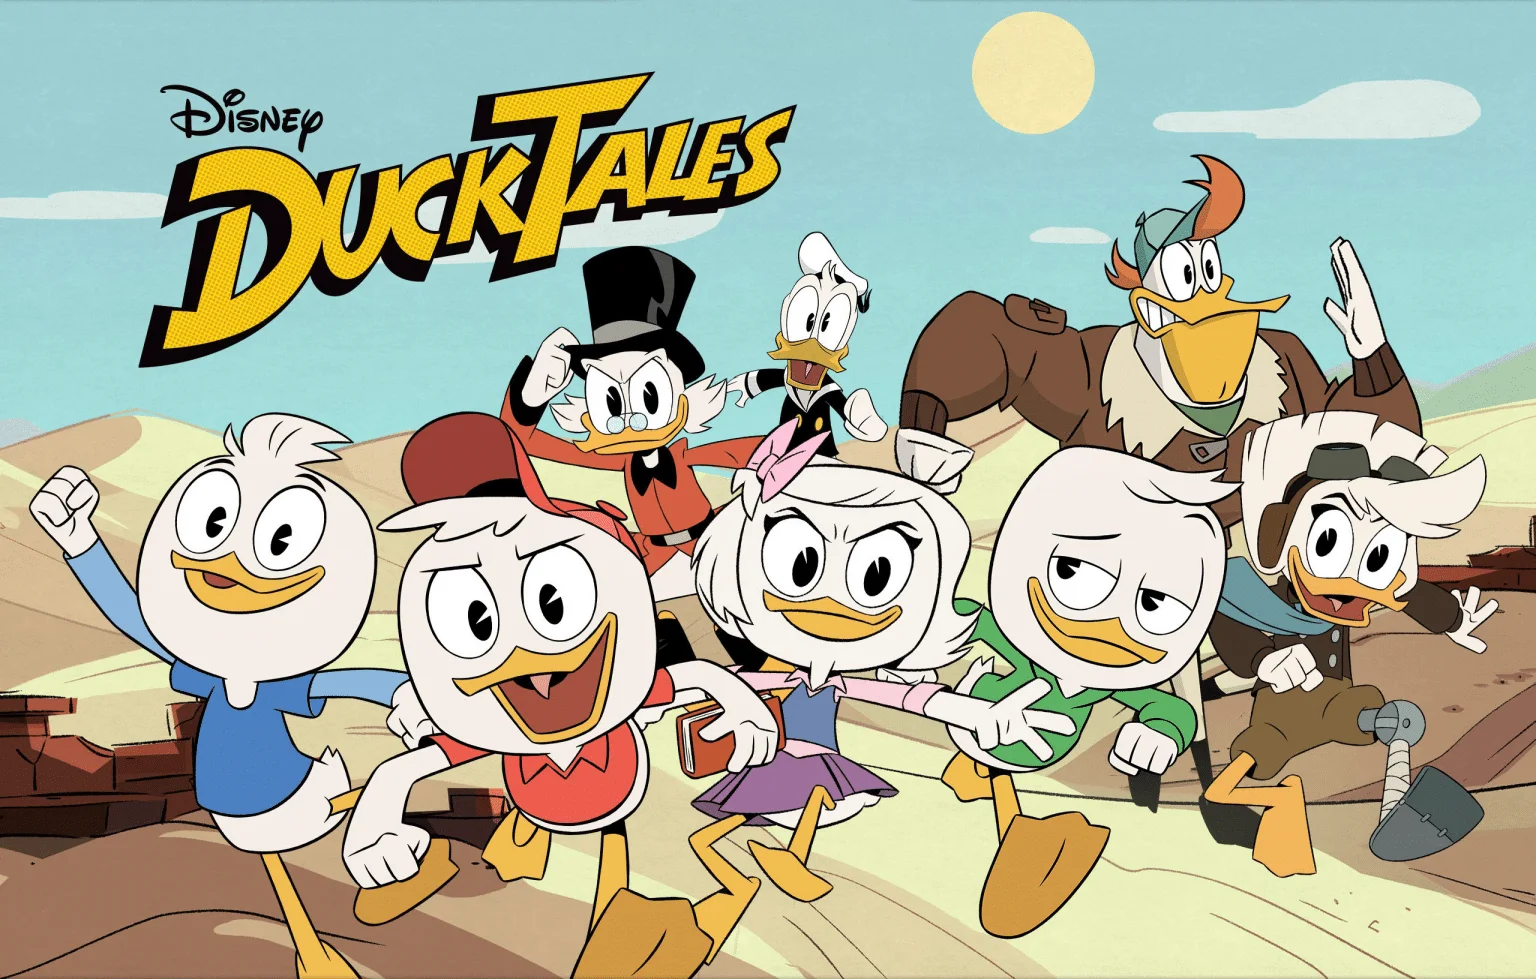 Ducktales season 4 cancelled